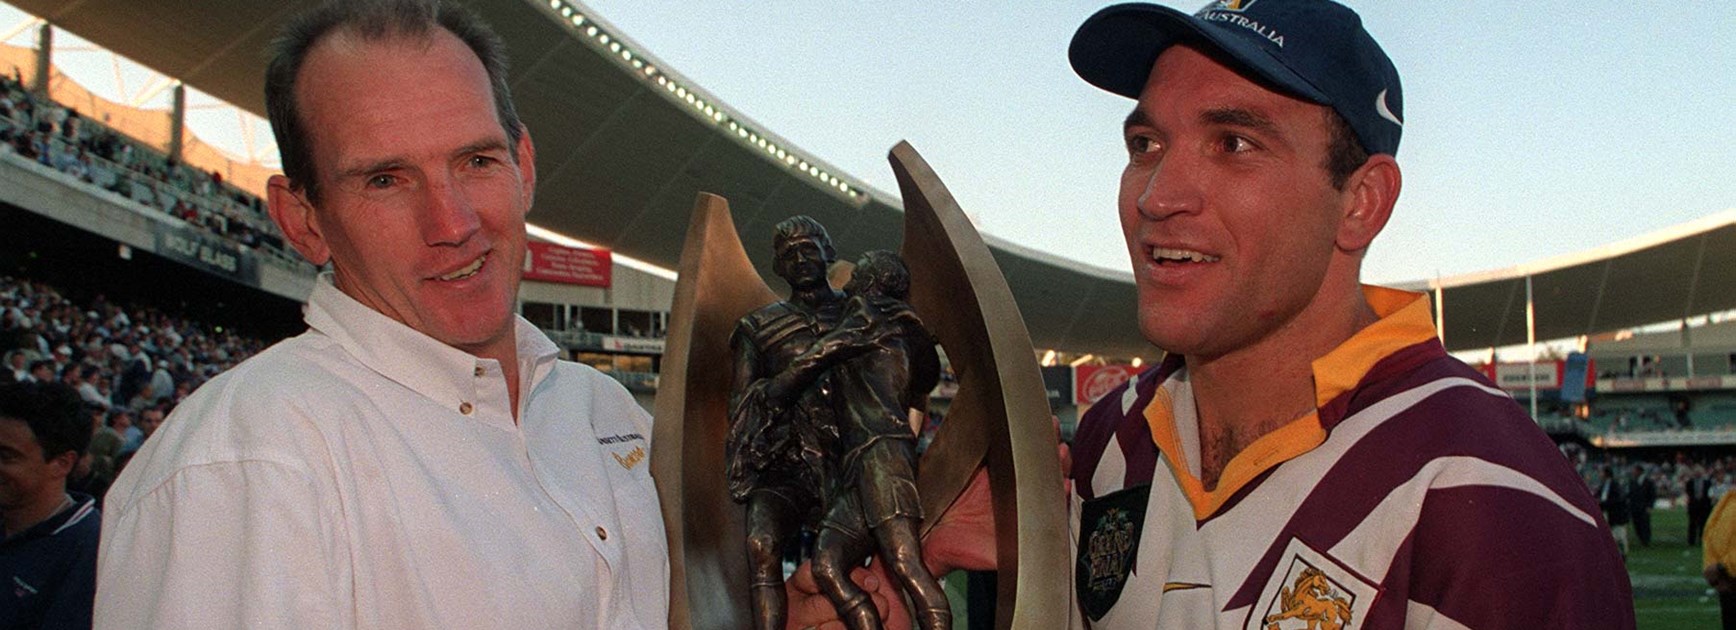 Gorden Tallis with Broncos coach Wayne Bennett after the Broncos' 1998 NRL Grand Final victory.